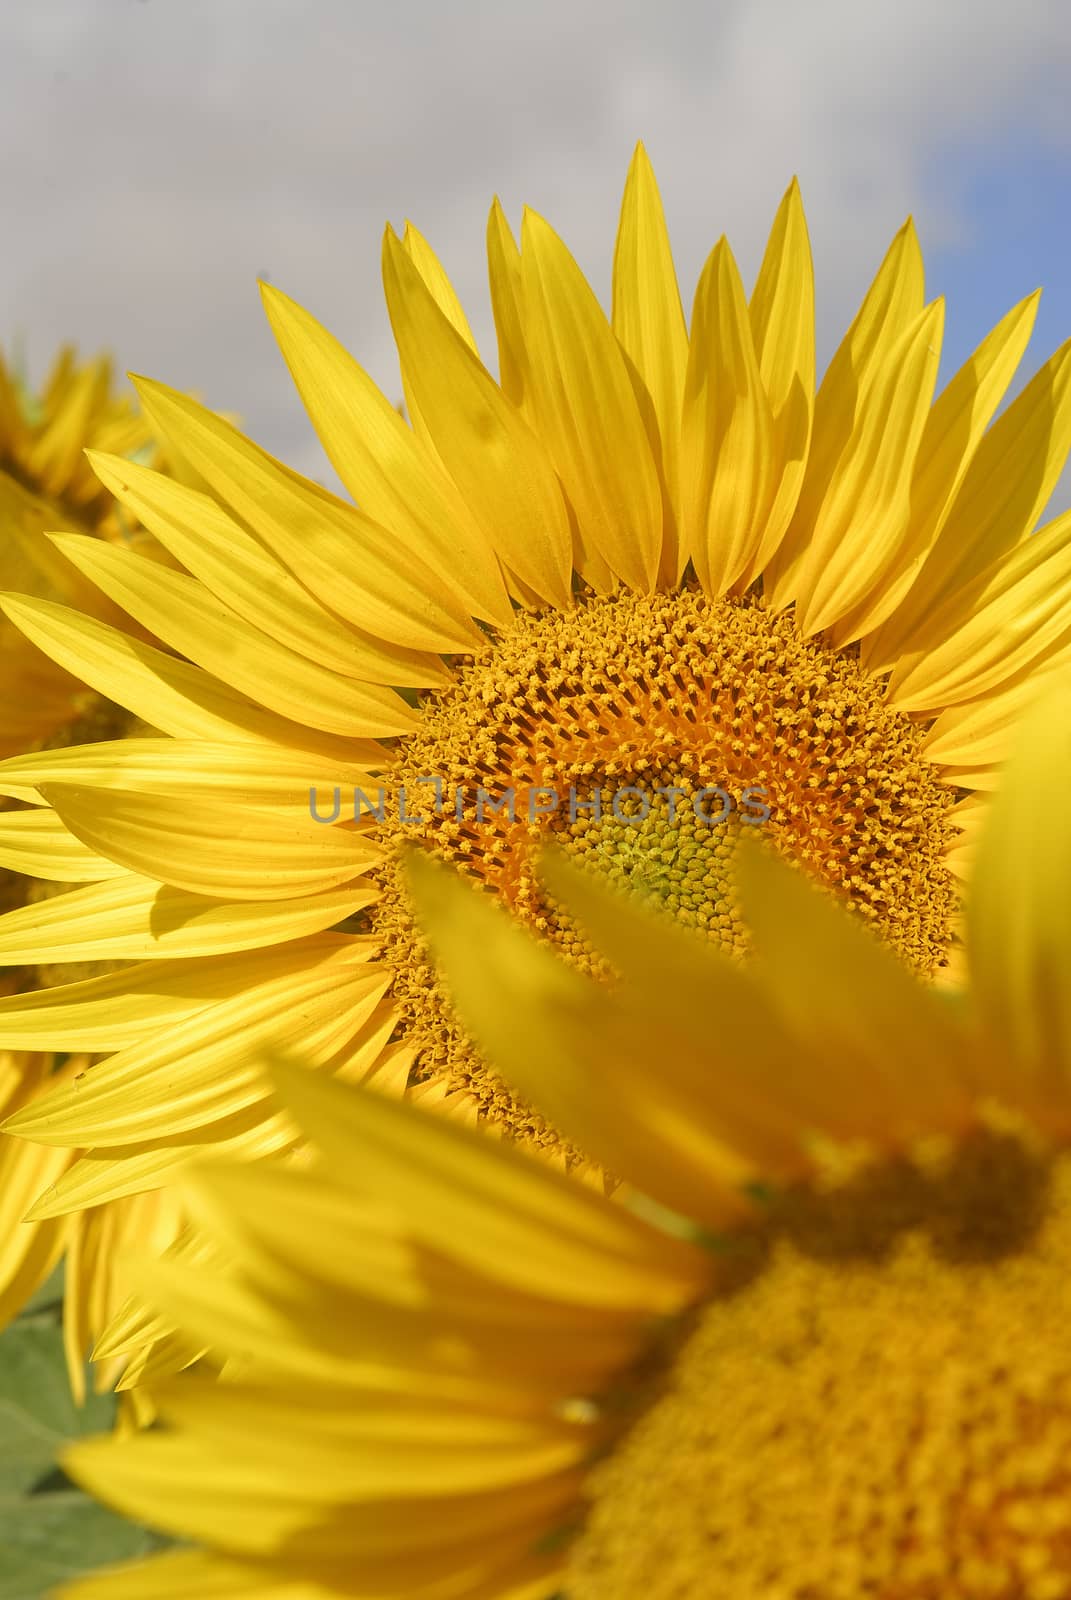 Helianthus annus, Sunflower, Allergens Plants by jalonsohu@gmail.com